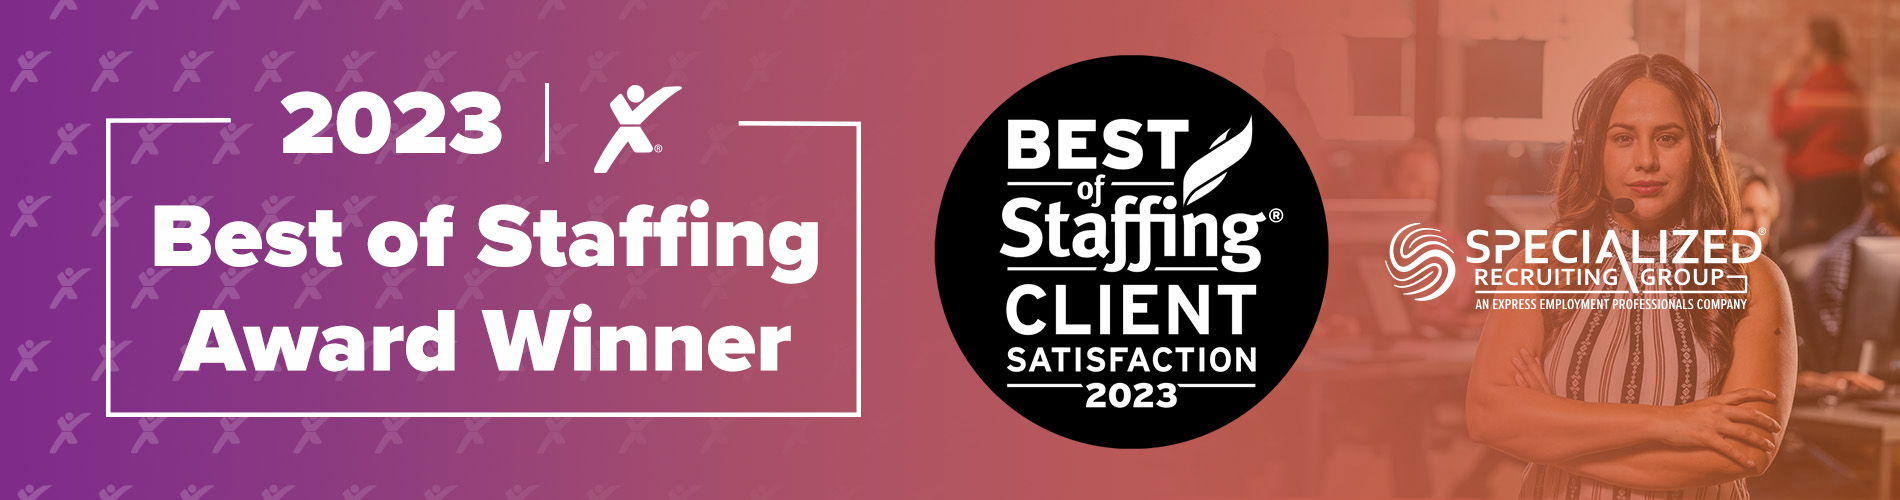 Best of Staffing Client Award 2023